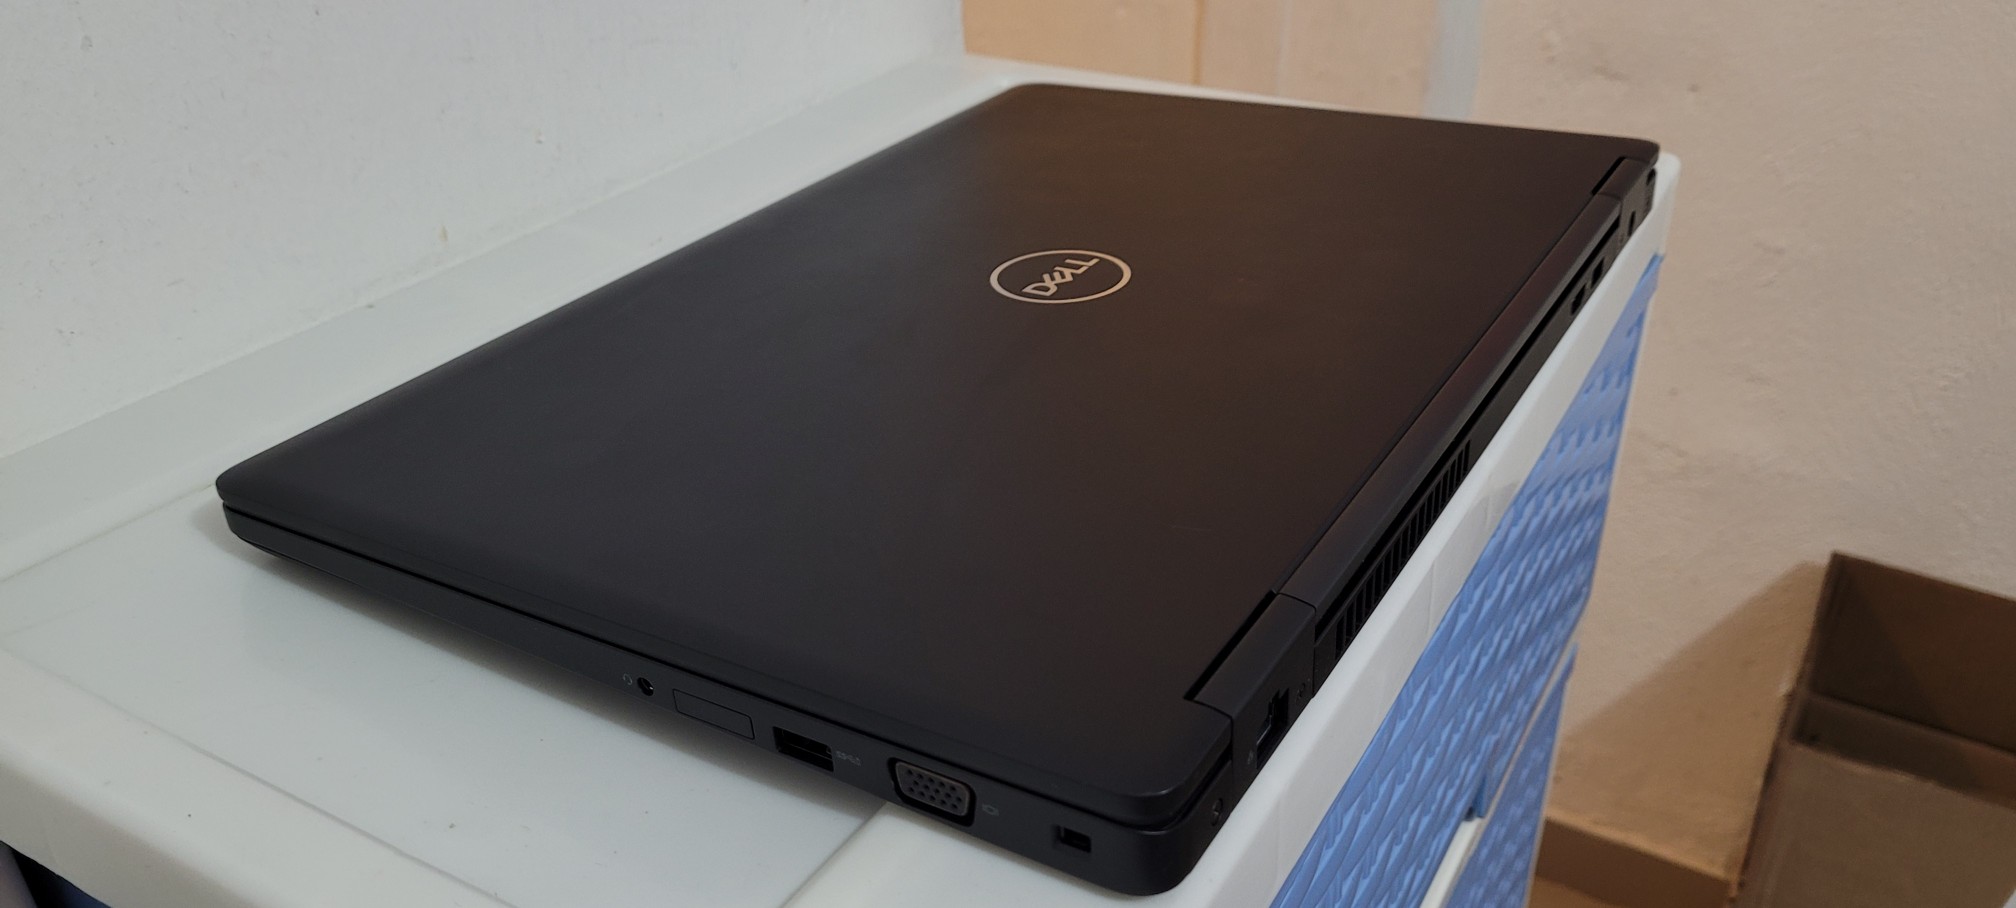 computadoras y laptops - Dell 5590 17 Pulg Core i5 8va Gen Ram 16gb Disco 512gb SSD Video 8gb 2